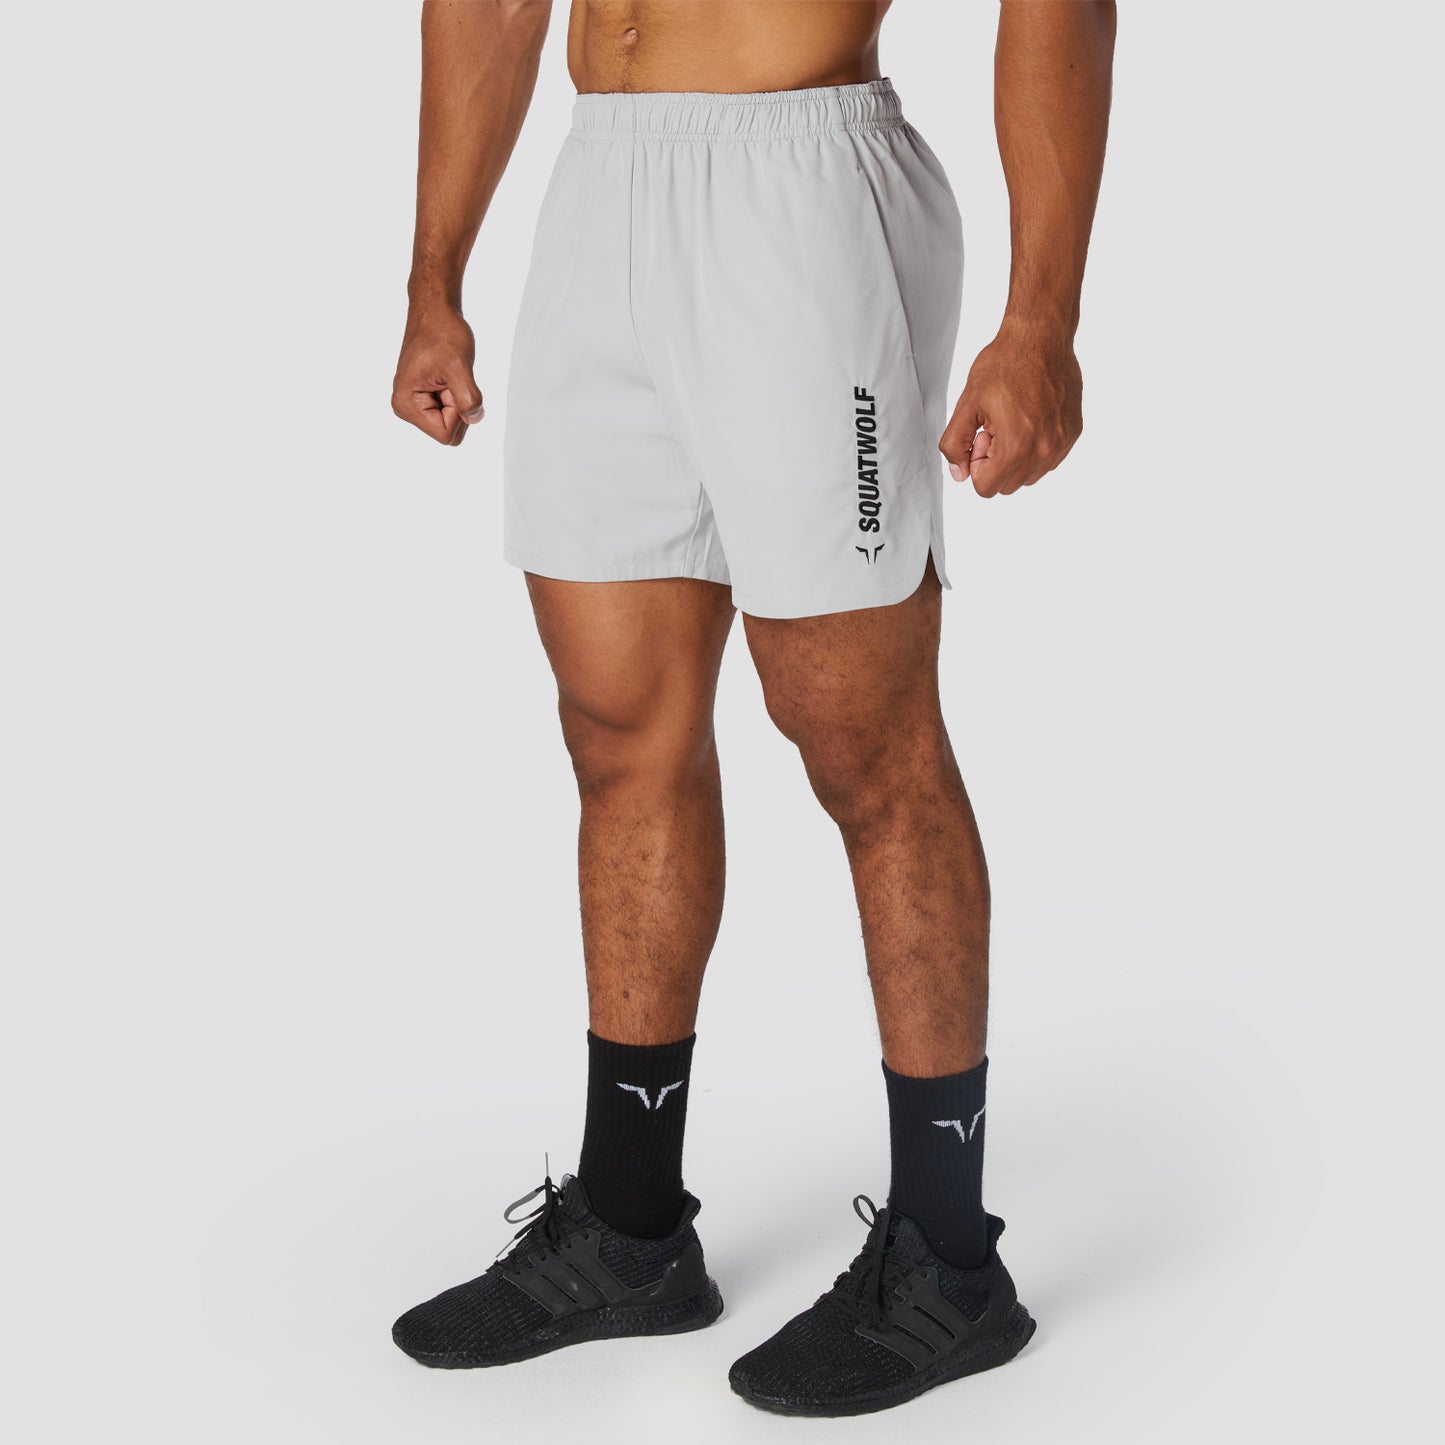 squatwolf-workout-short-for-men-warrior-shorts-light-grey-gym-wear